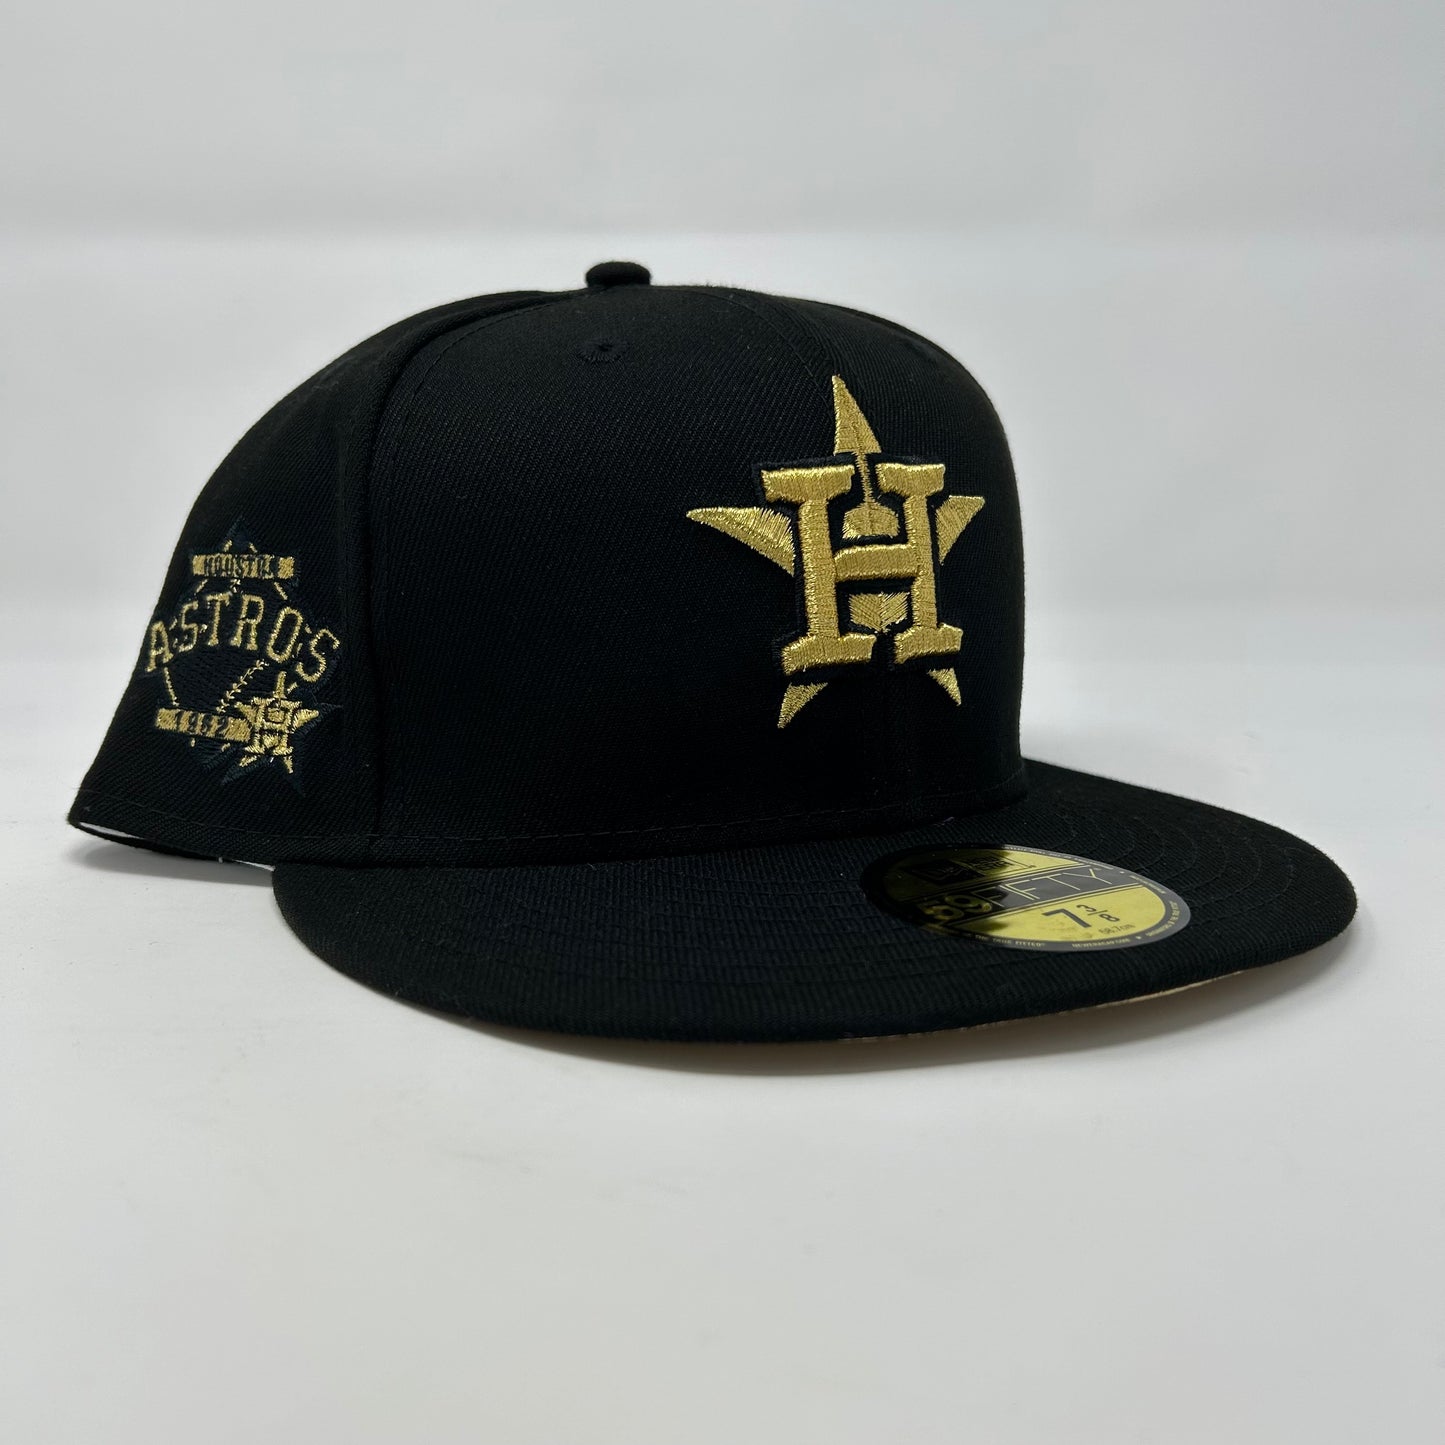 Houston Astros “Metallic Gold” Hat